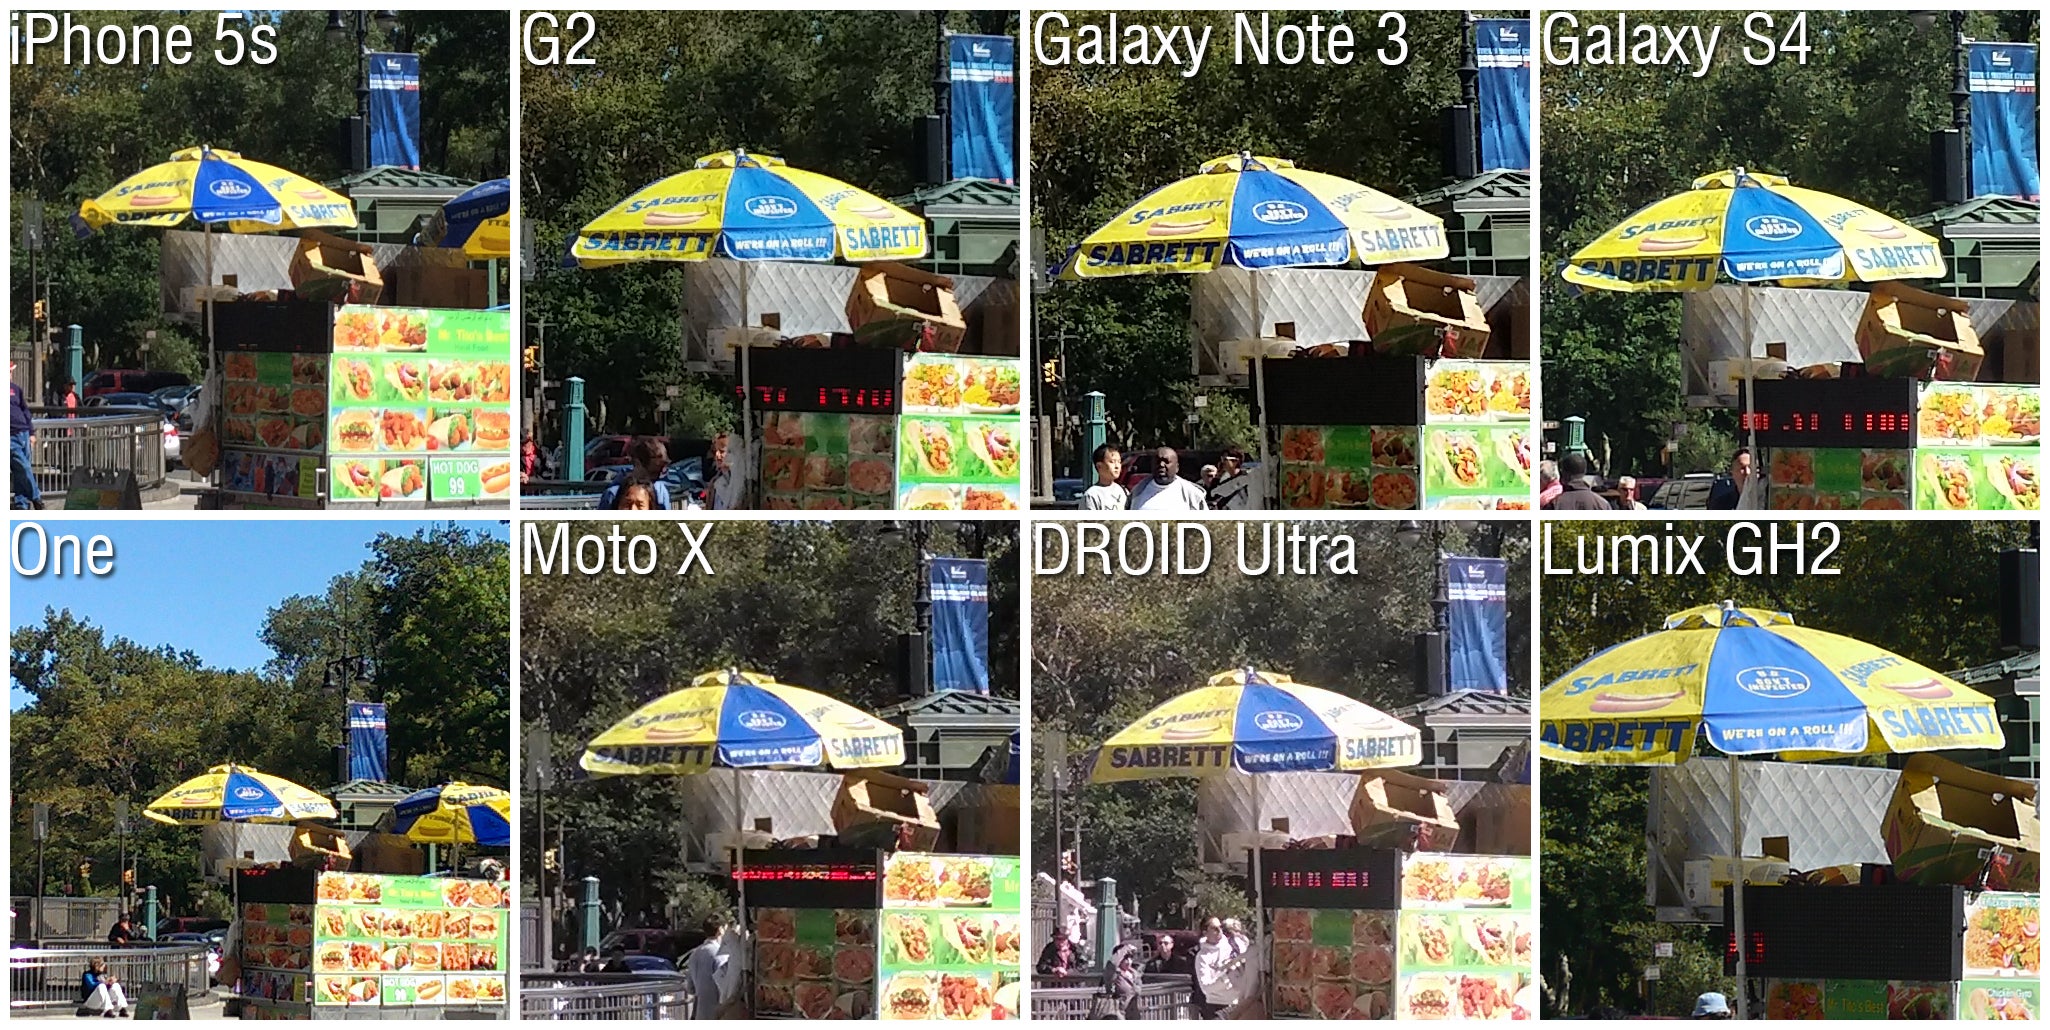 100% crop - Camera Comparison: iPhone 5s vs LG G2, Samsung Galaxy Note 3, Galaxy S4, HTC One, Motorola Moto X, DROID Ultra